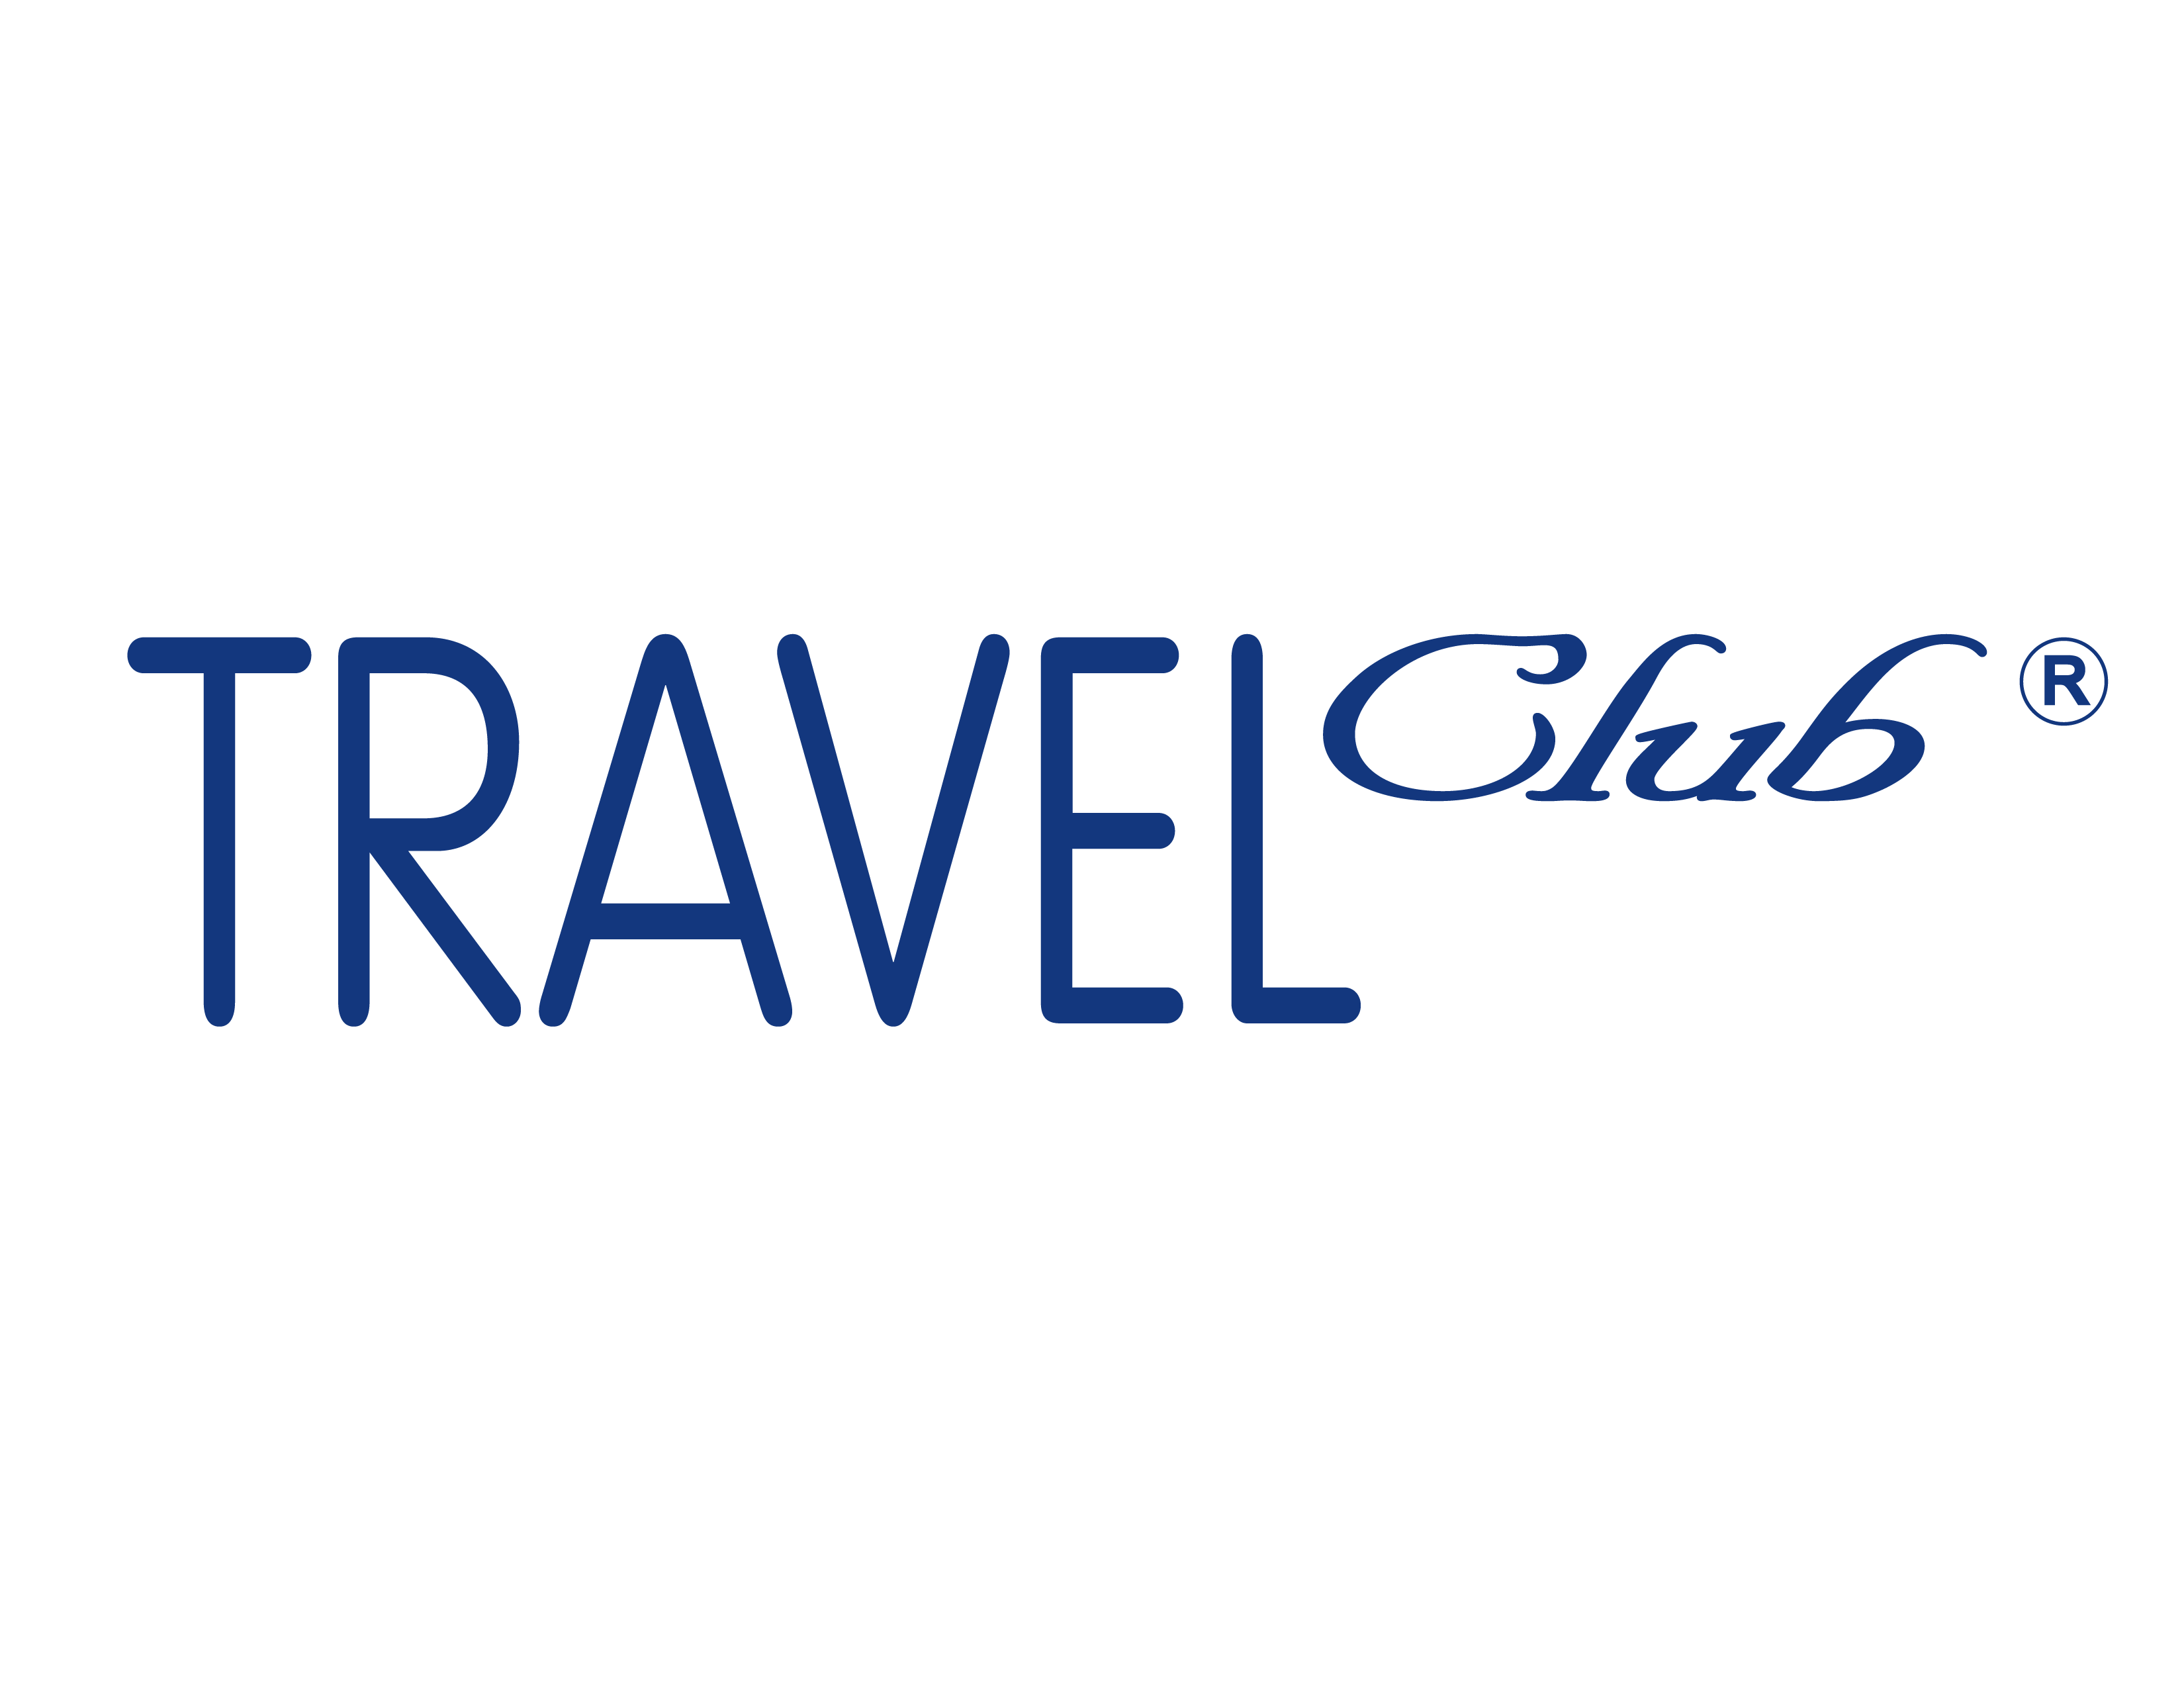 travel one club